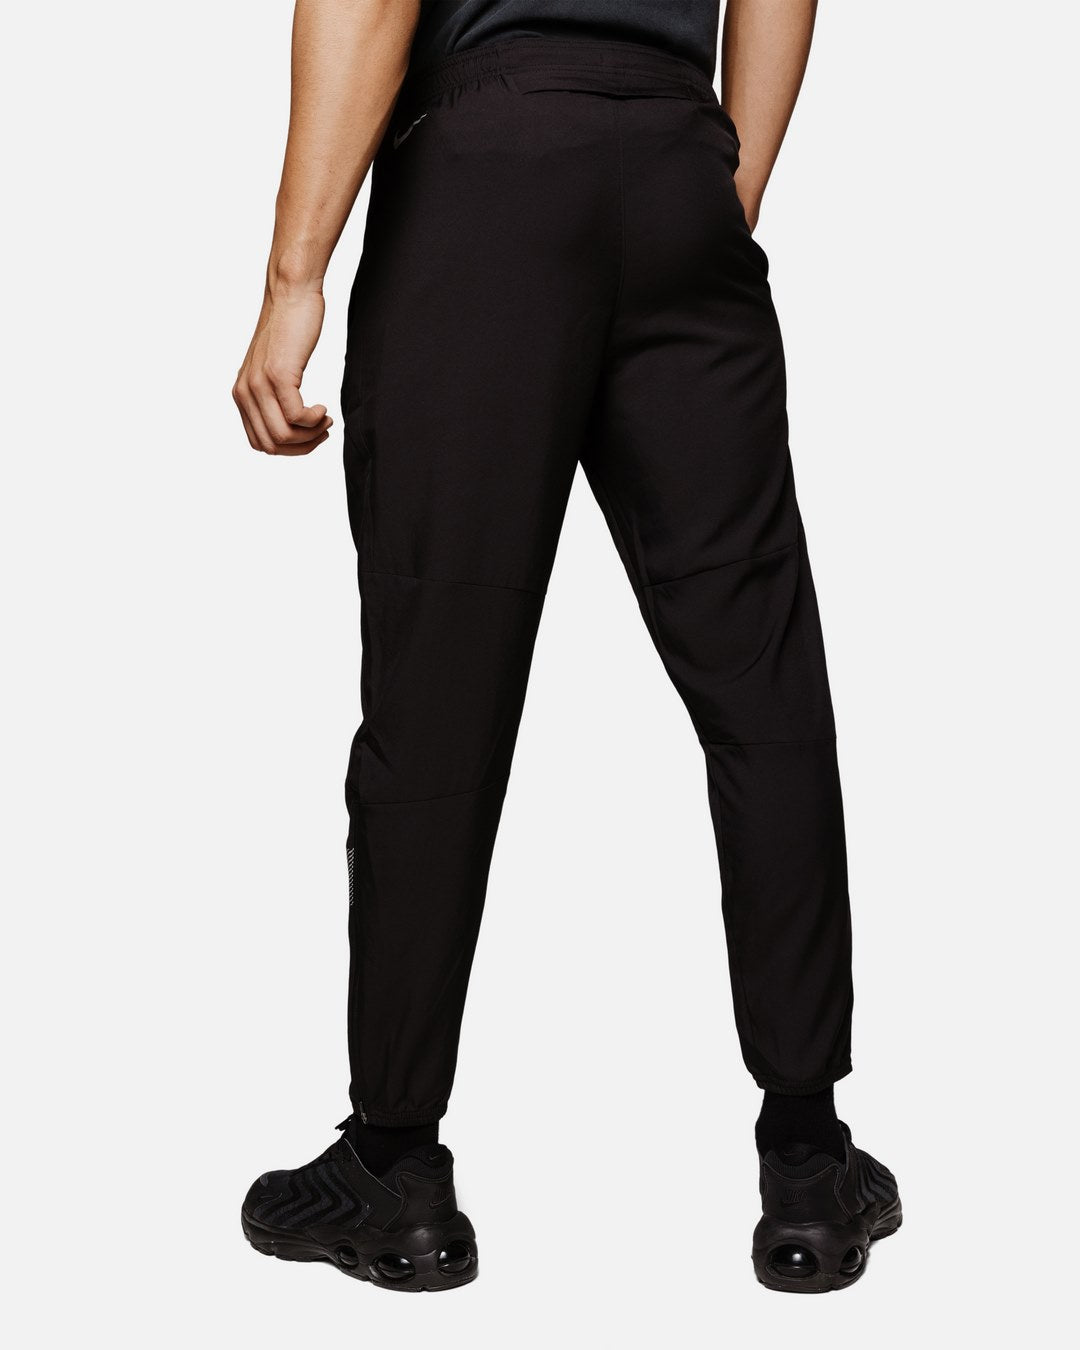 Pantalon Nike Challenger Flash - Noir